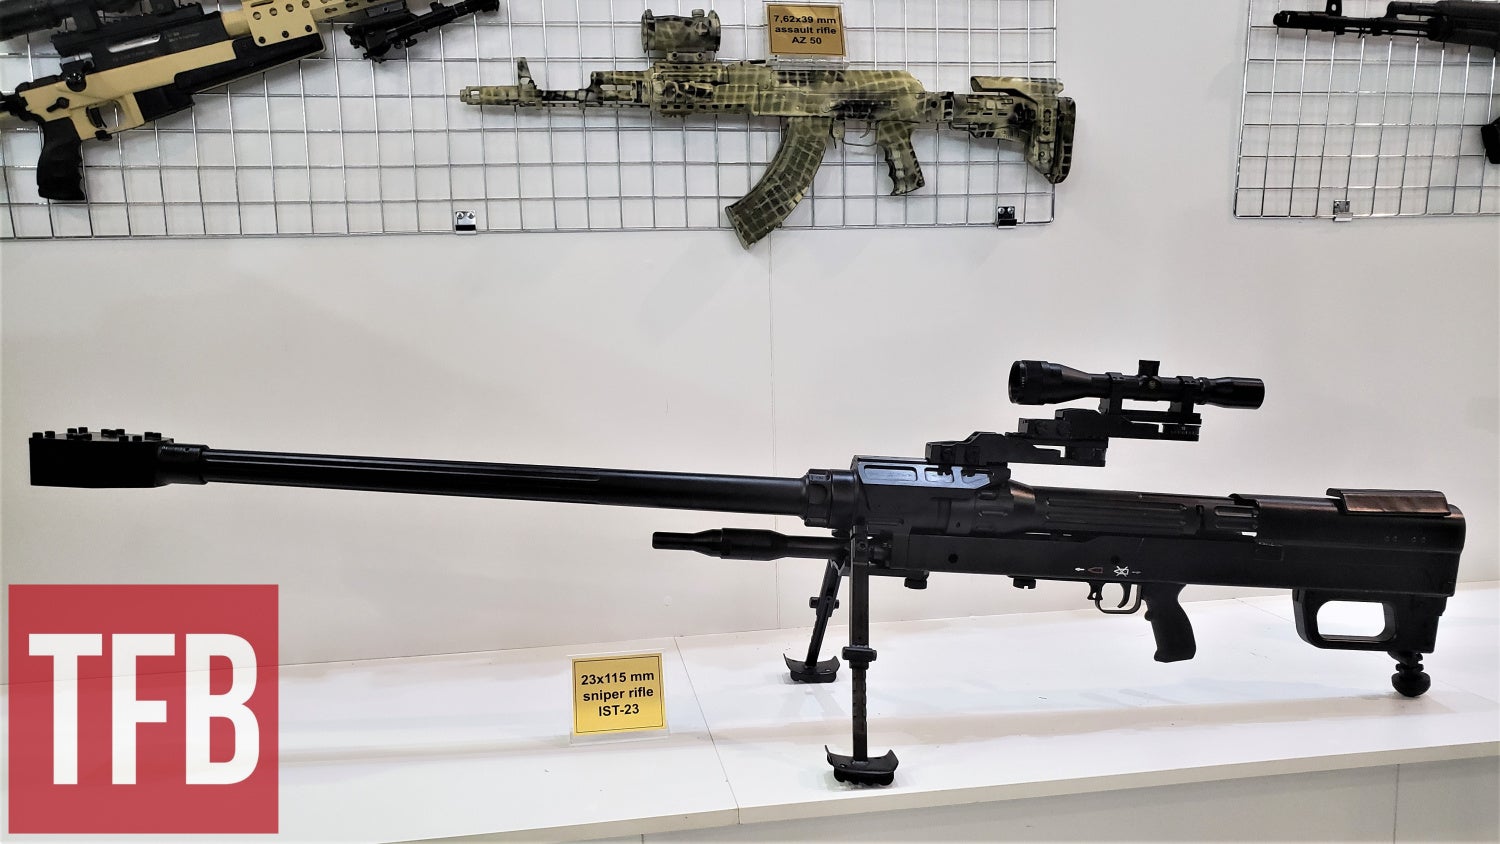 Sniper rifle IST 23